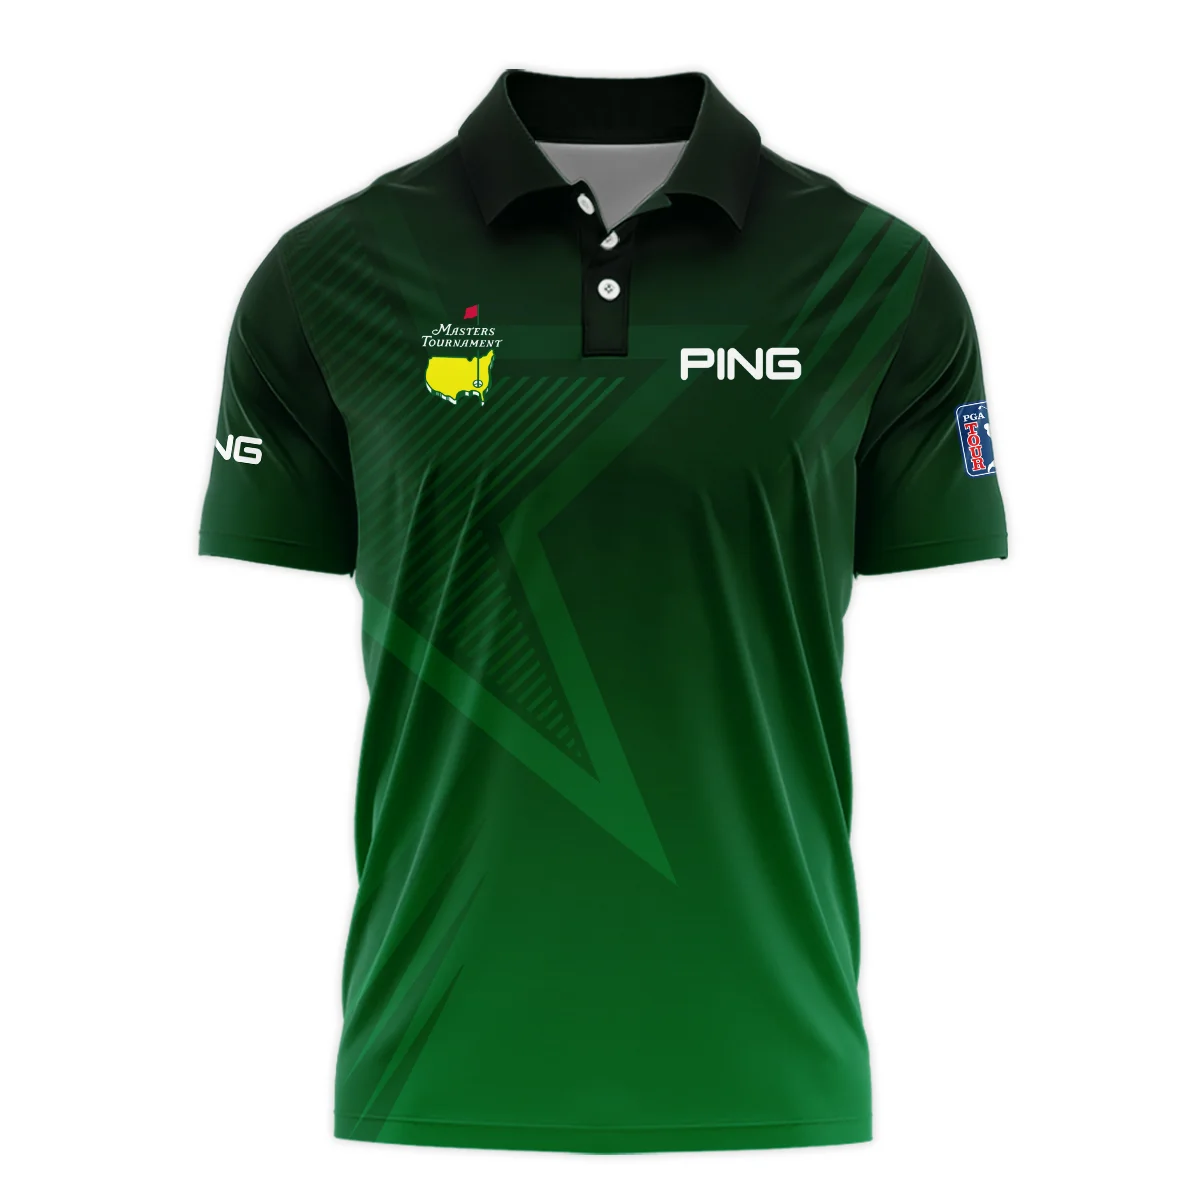 Ping Masters Tournament Polo Shirt Dark Green Gradient Star Pattern Golf Sports Polo Shirt For Men